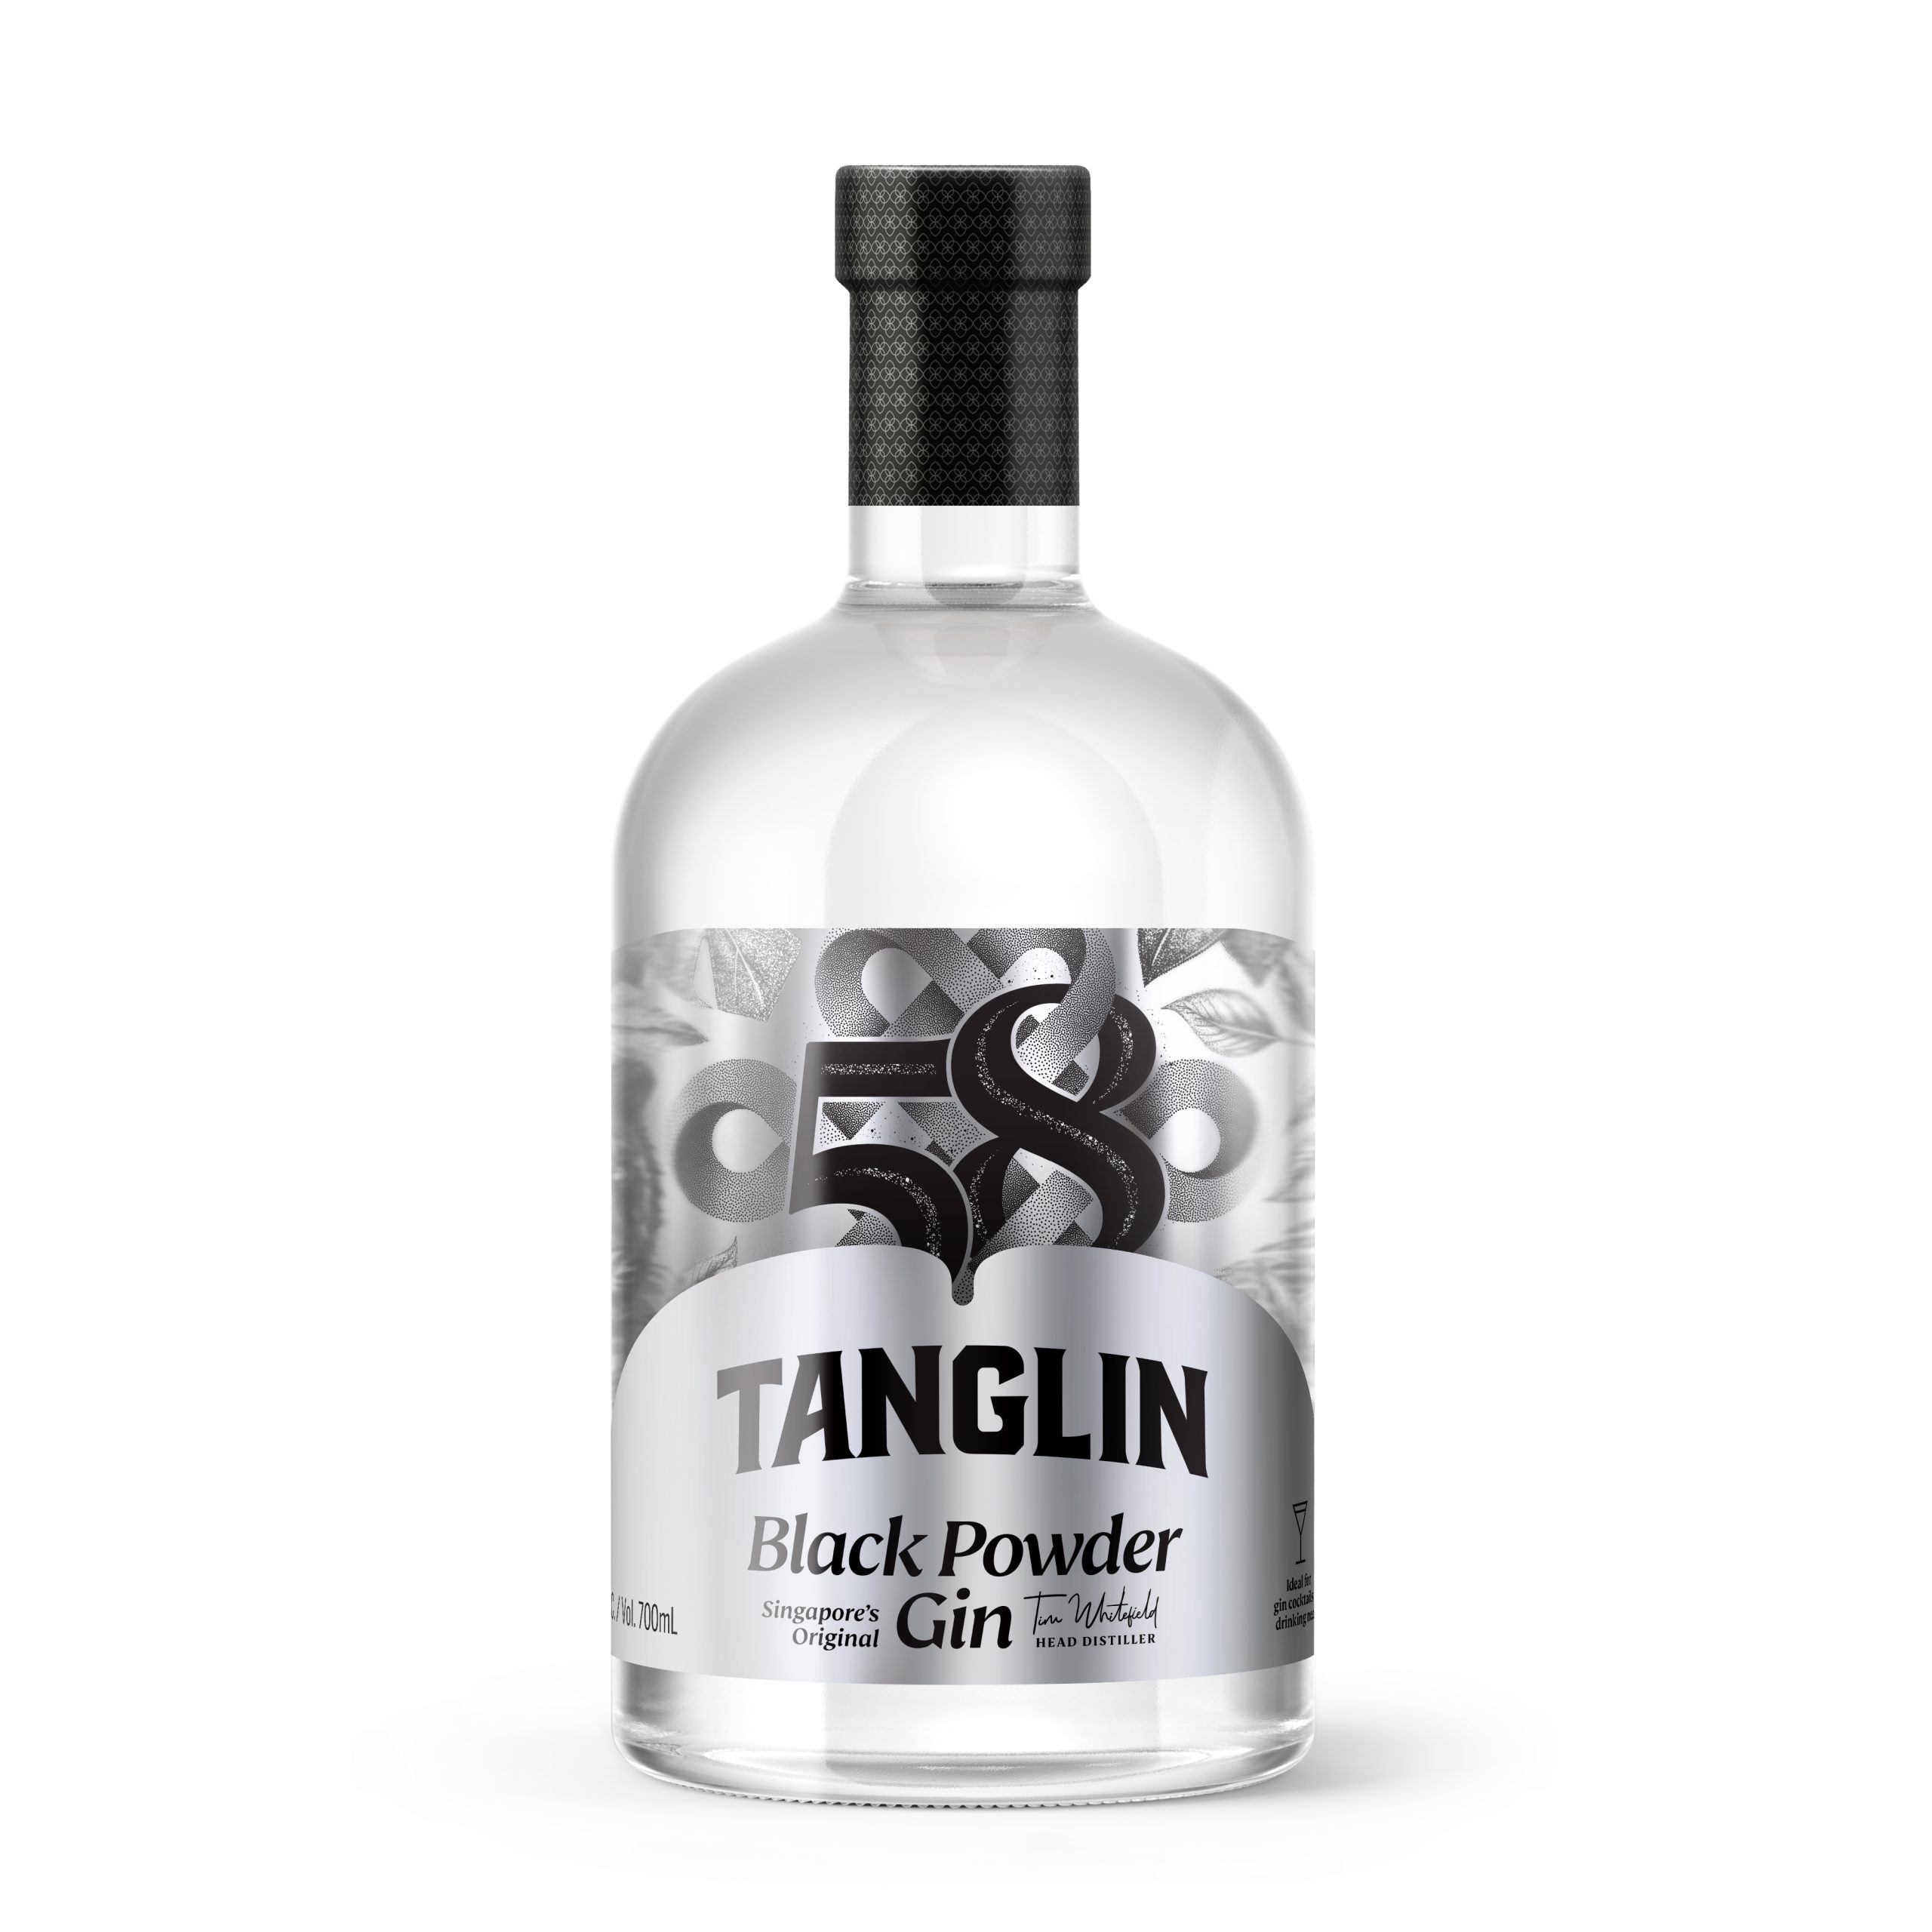 TANGLIN Black Powder Gin 70cl – Singapore